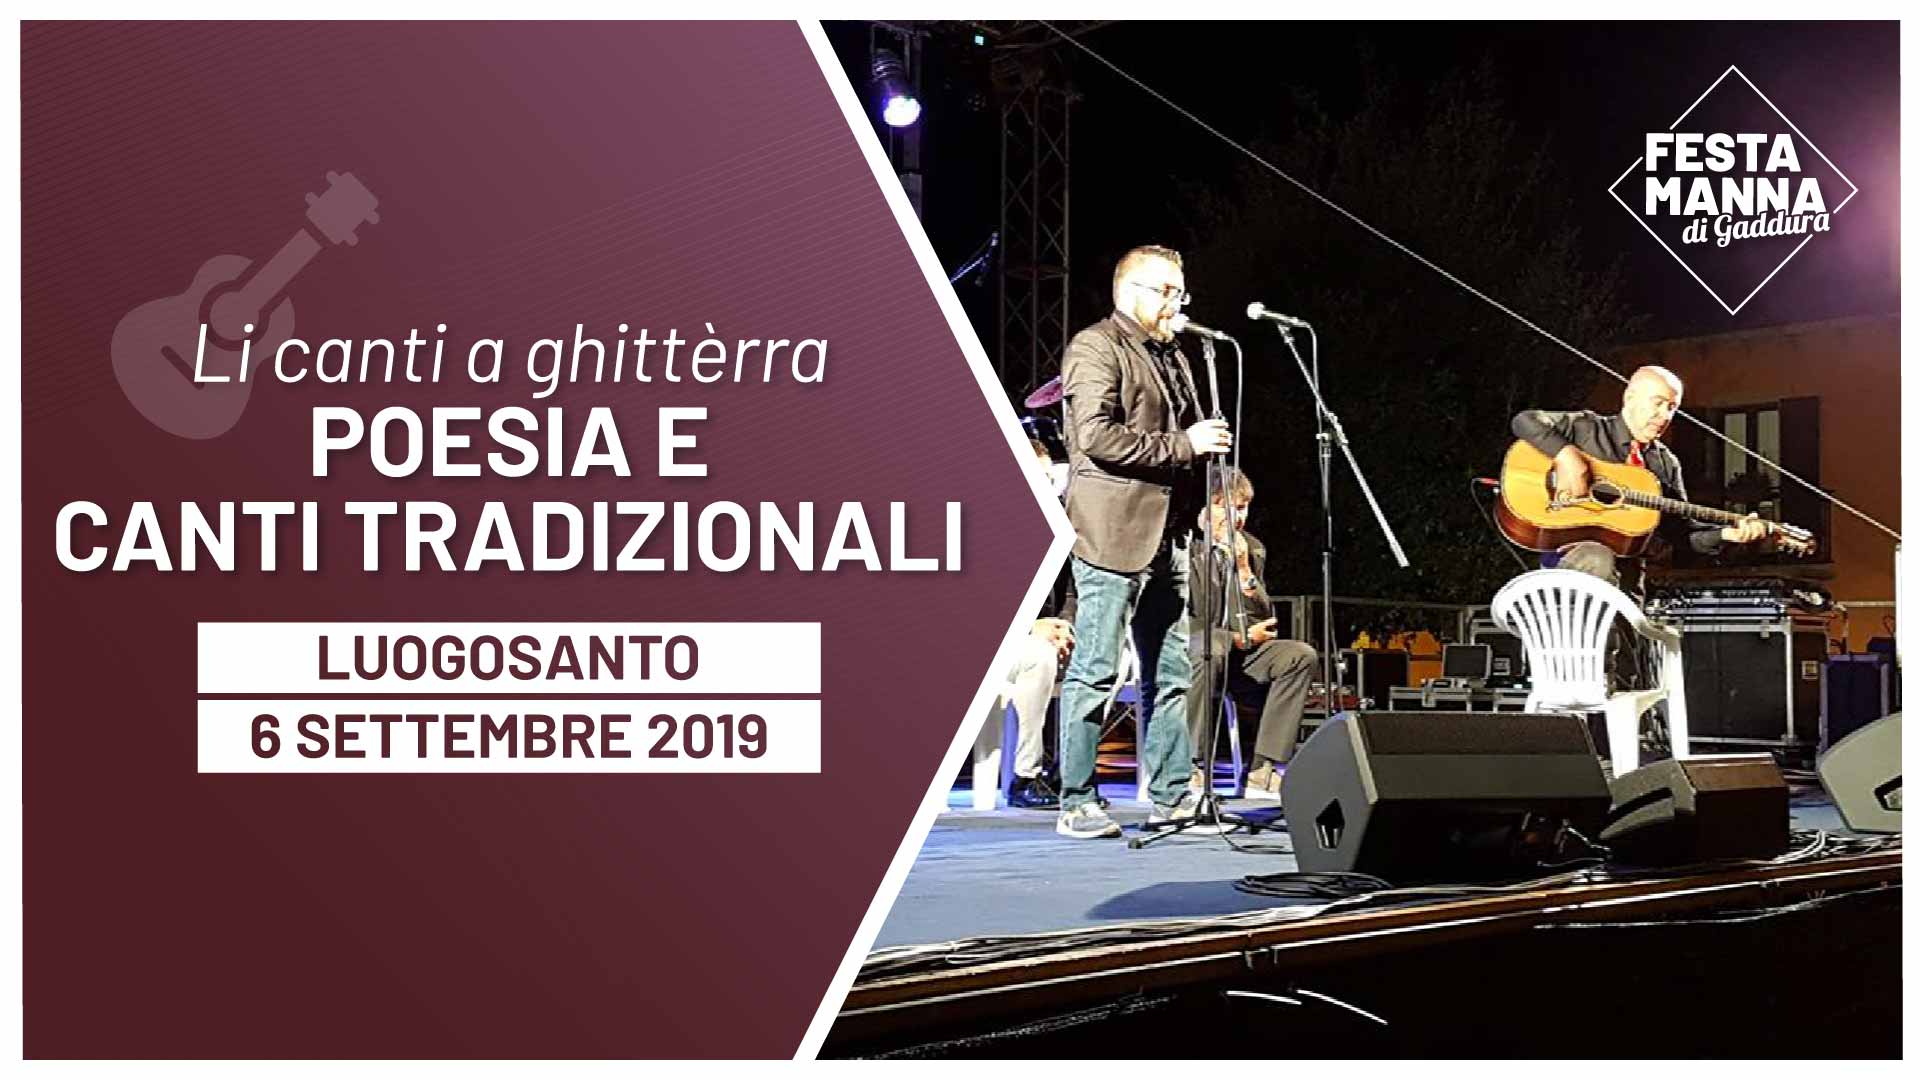 "Li canti a ghittèrra" musique et chant traditionnels gallurese | Festa Manna di Gaddura 2019